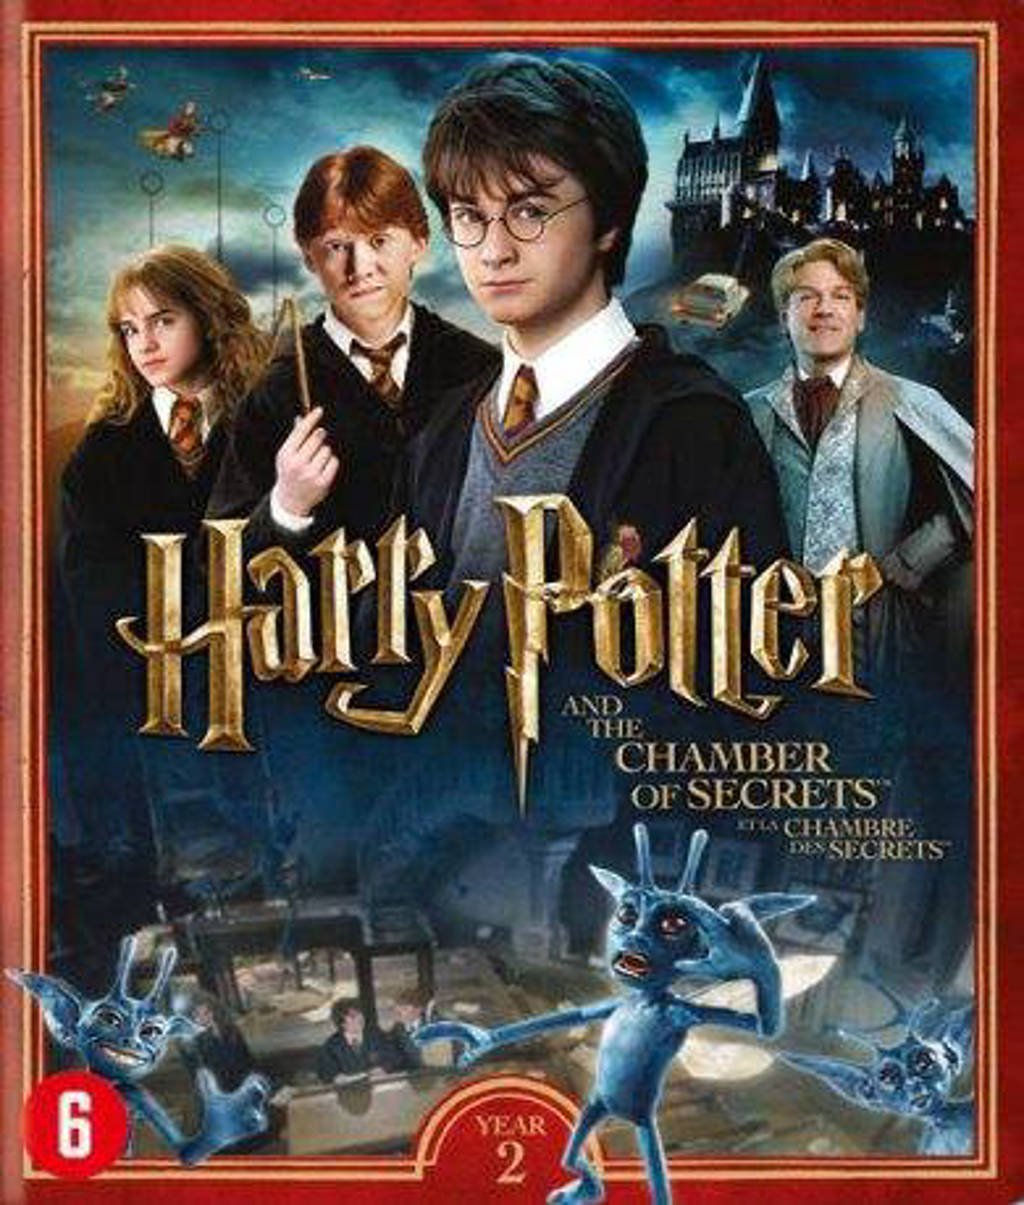 Harry Potter 2 - De Geheime Kamer (Blu-ray)